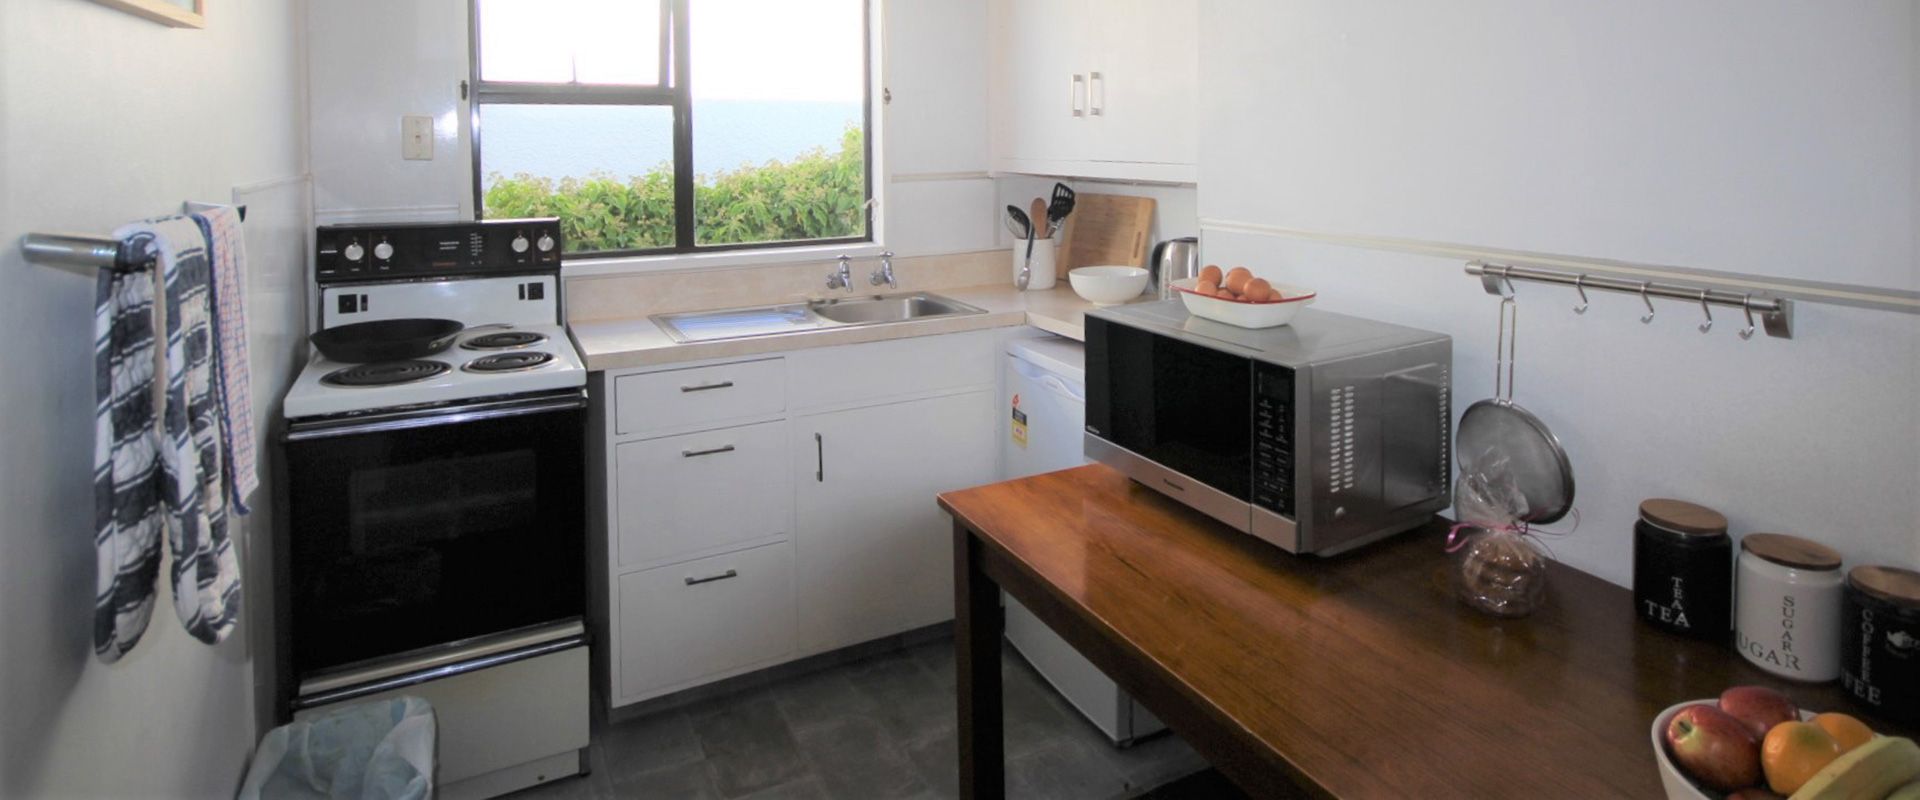 large 2-bedroom unit kitchen facilities